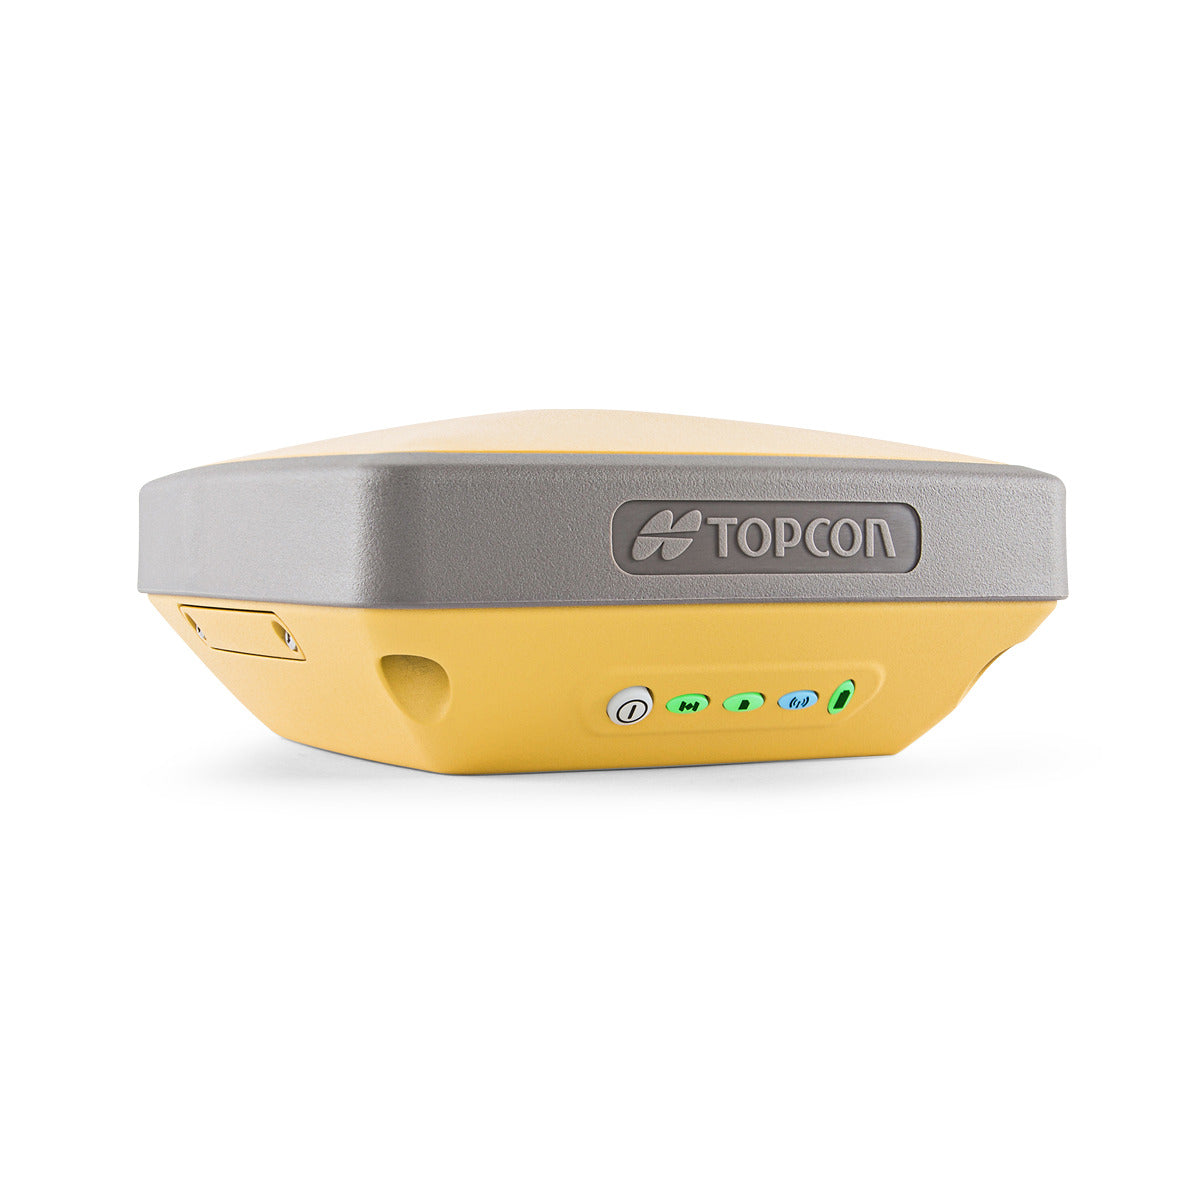 Topcon Hiper SR GNSS Integrated Receiver